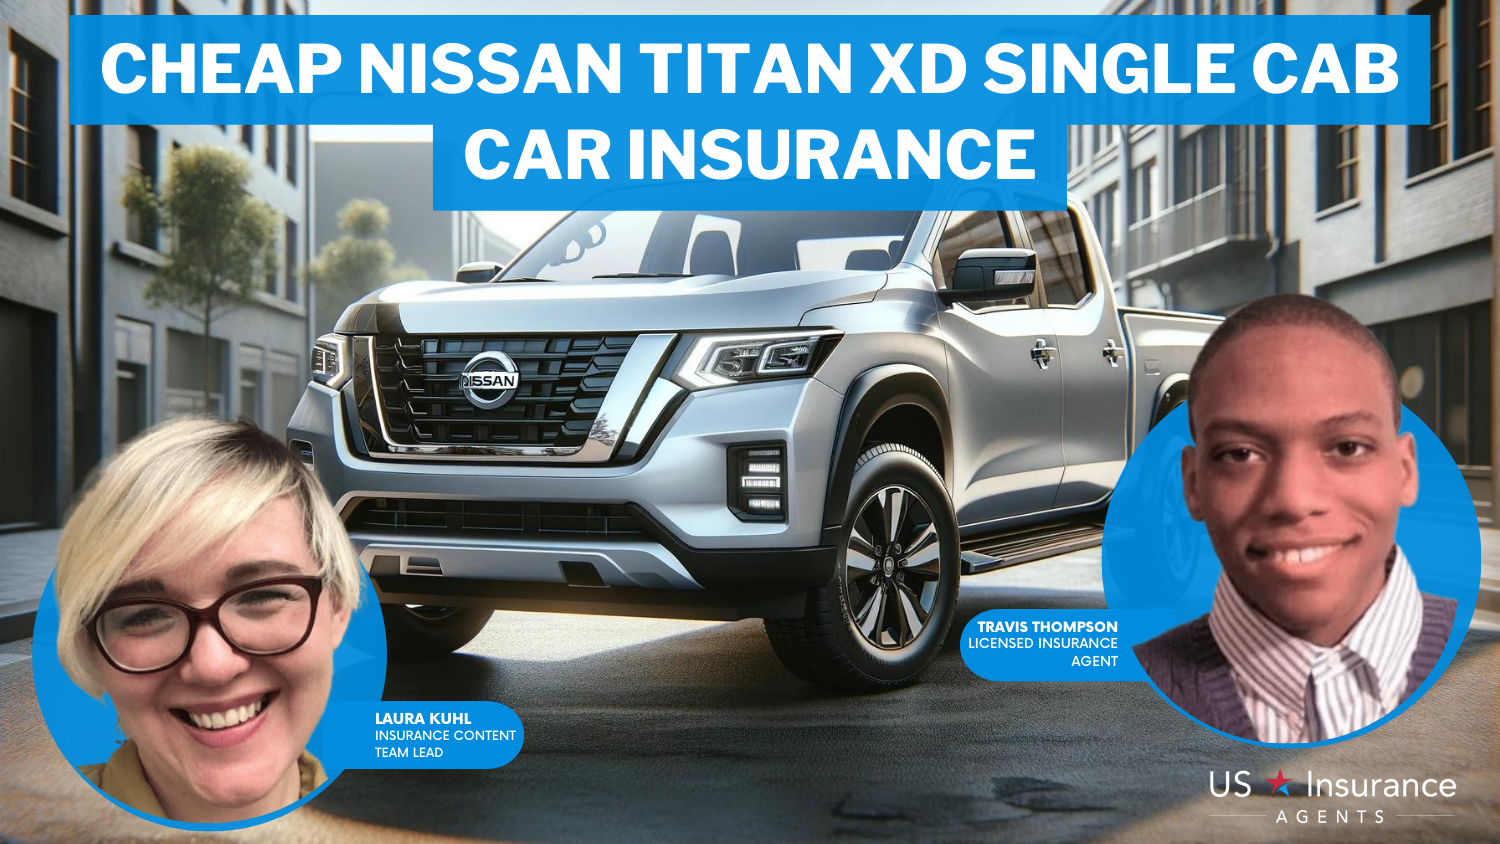 Cheap Nissan TITAN XD Single Cab Car Insurance: Travelers, Progressive, and State Farm